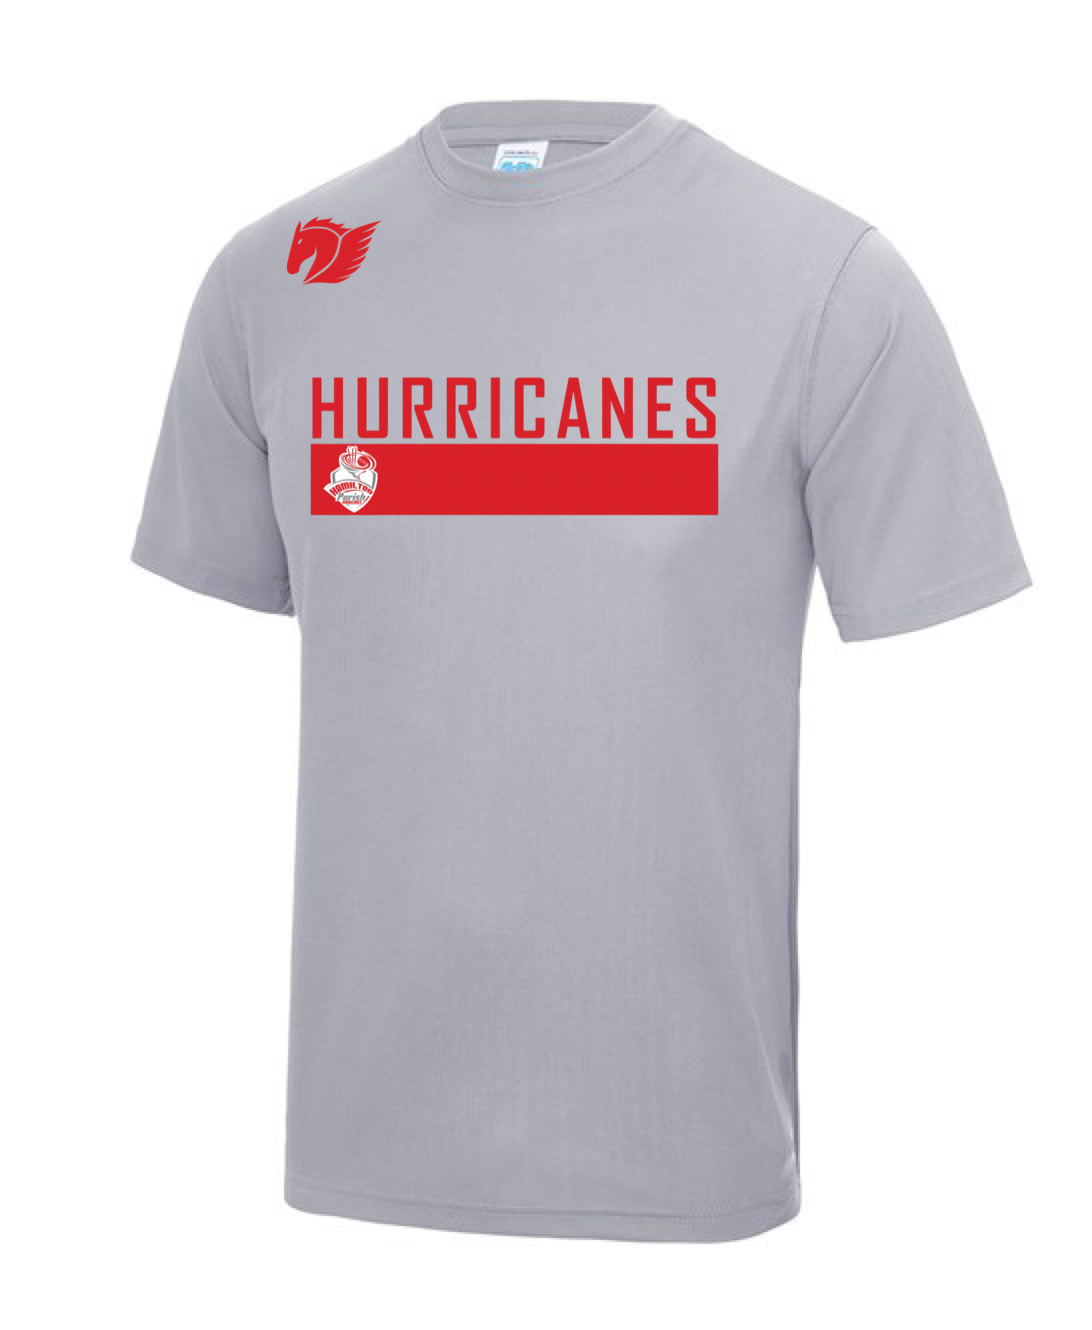 Hamilton Parish Hurricanes Supporters Shirt